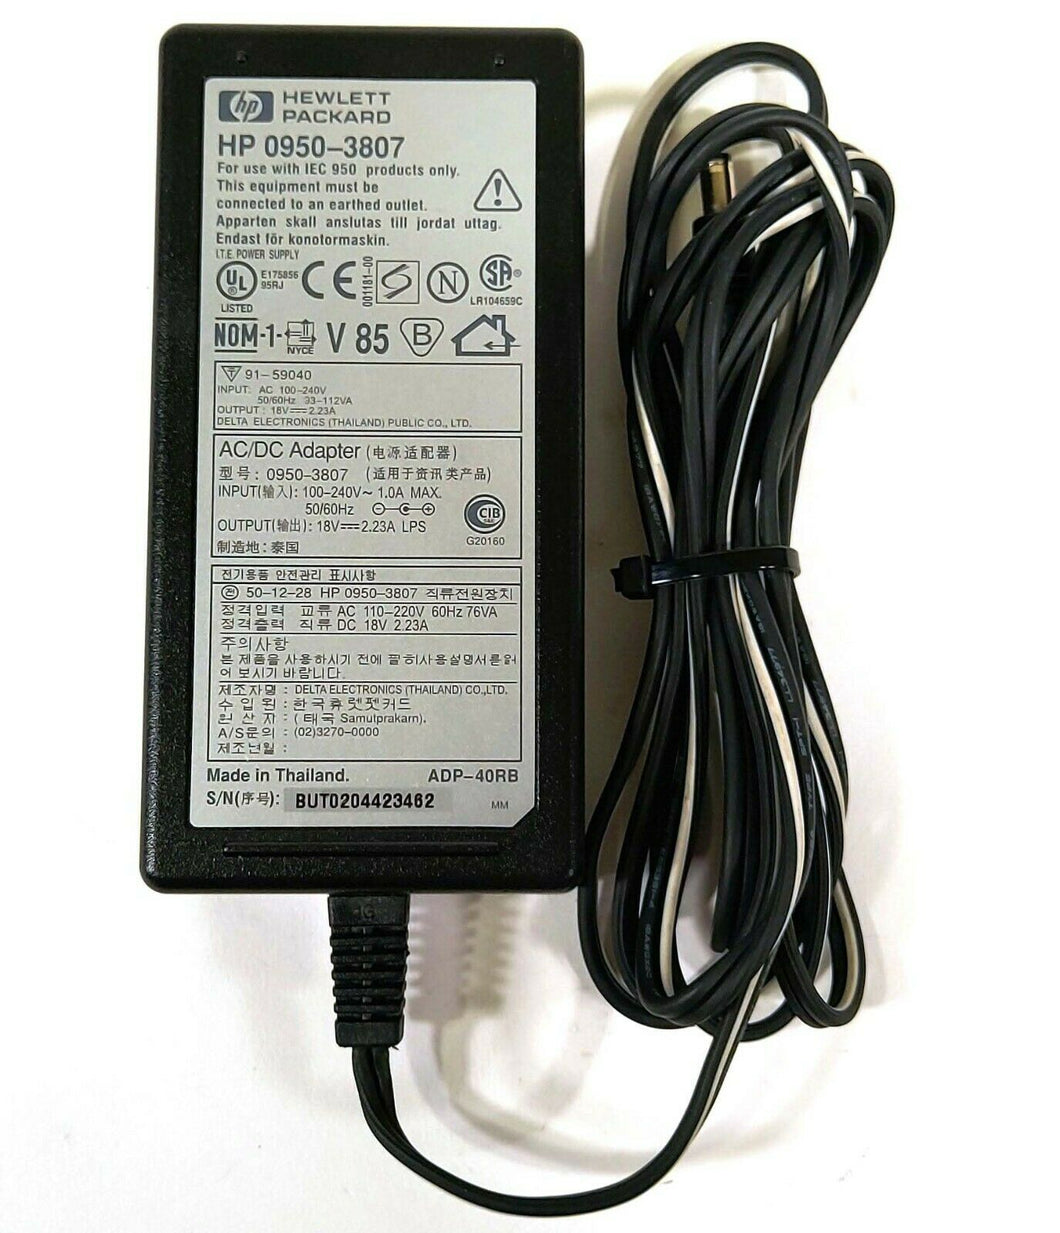 Hewlett Packard OEM Printer AC/DC Power Supply Adapter - 0950-3807